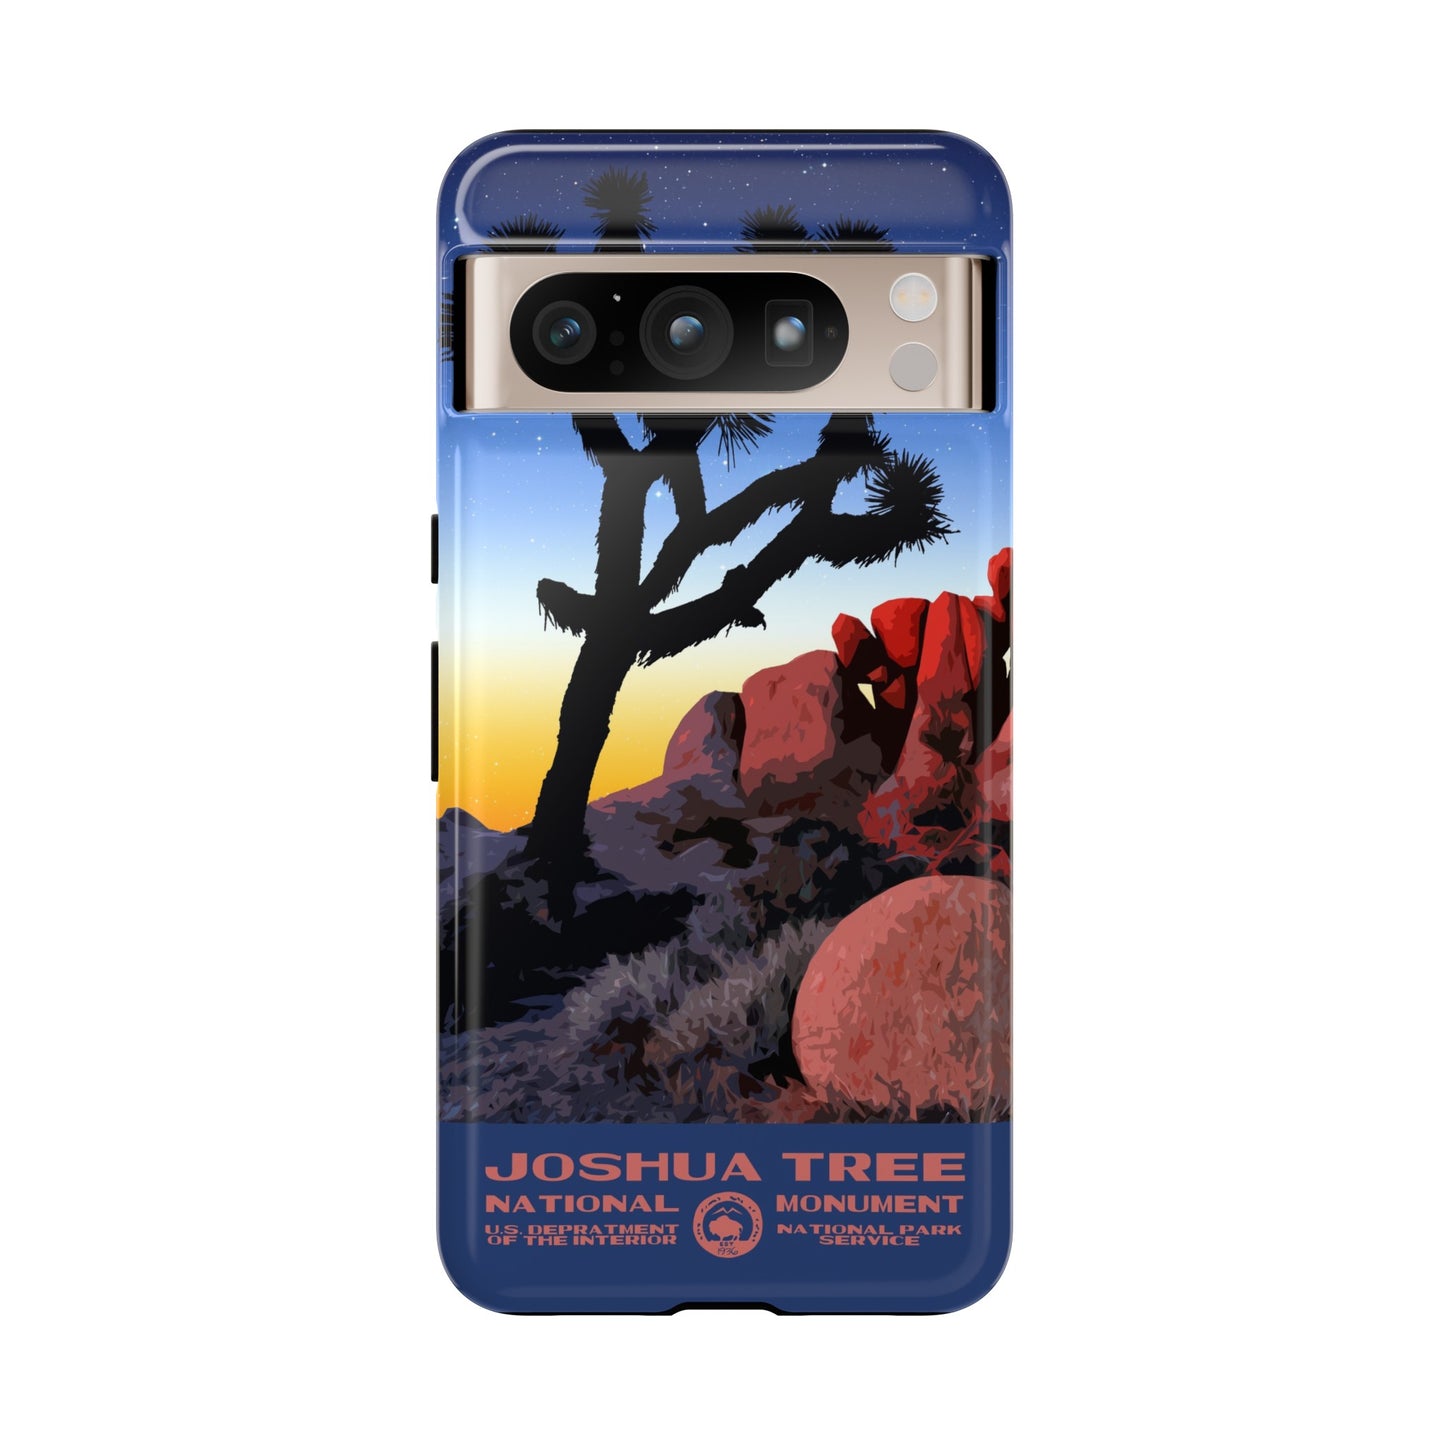 Joshua Tree National Park iPhone Case - Night